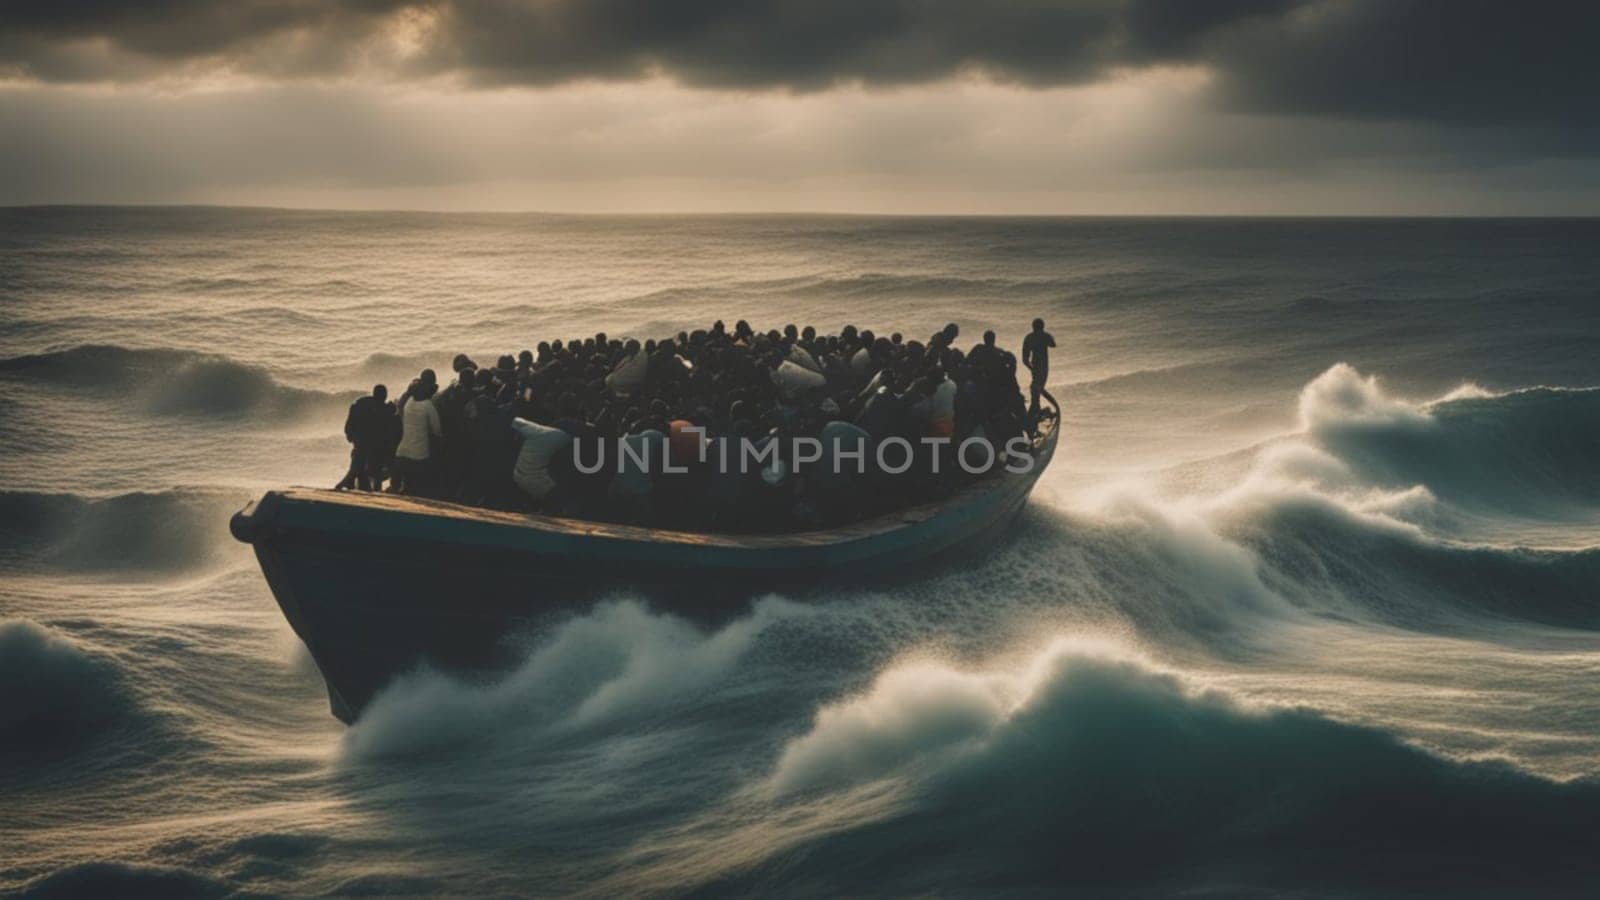 full boats full of illegal migrants traversing seastorm full of hope of better future by verbano